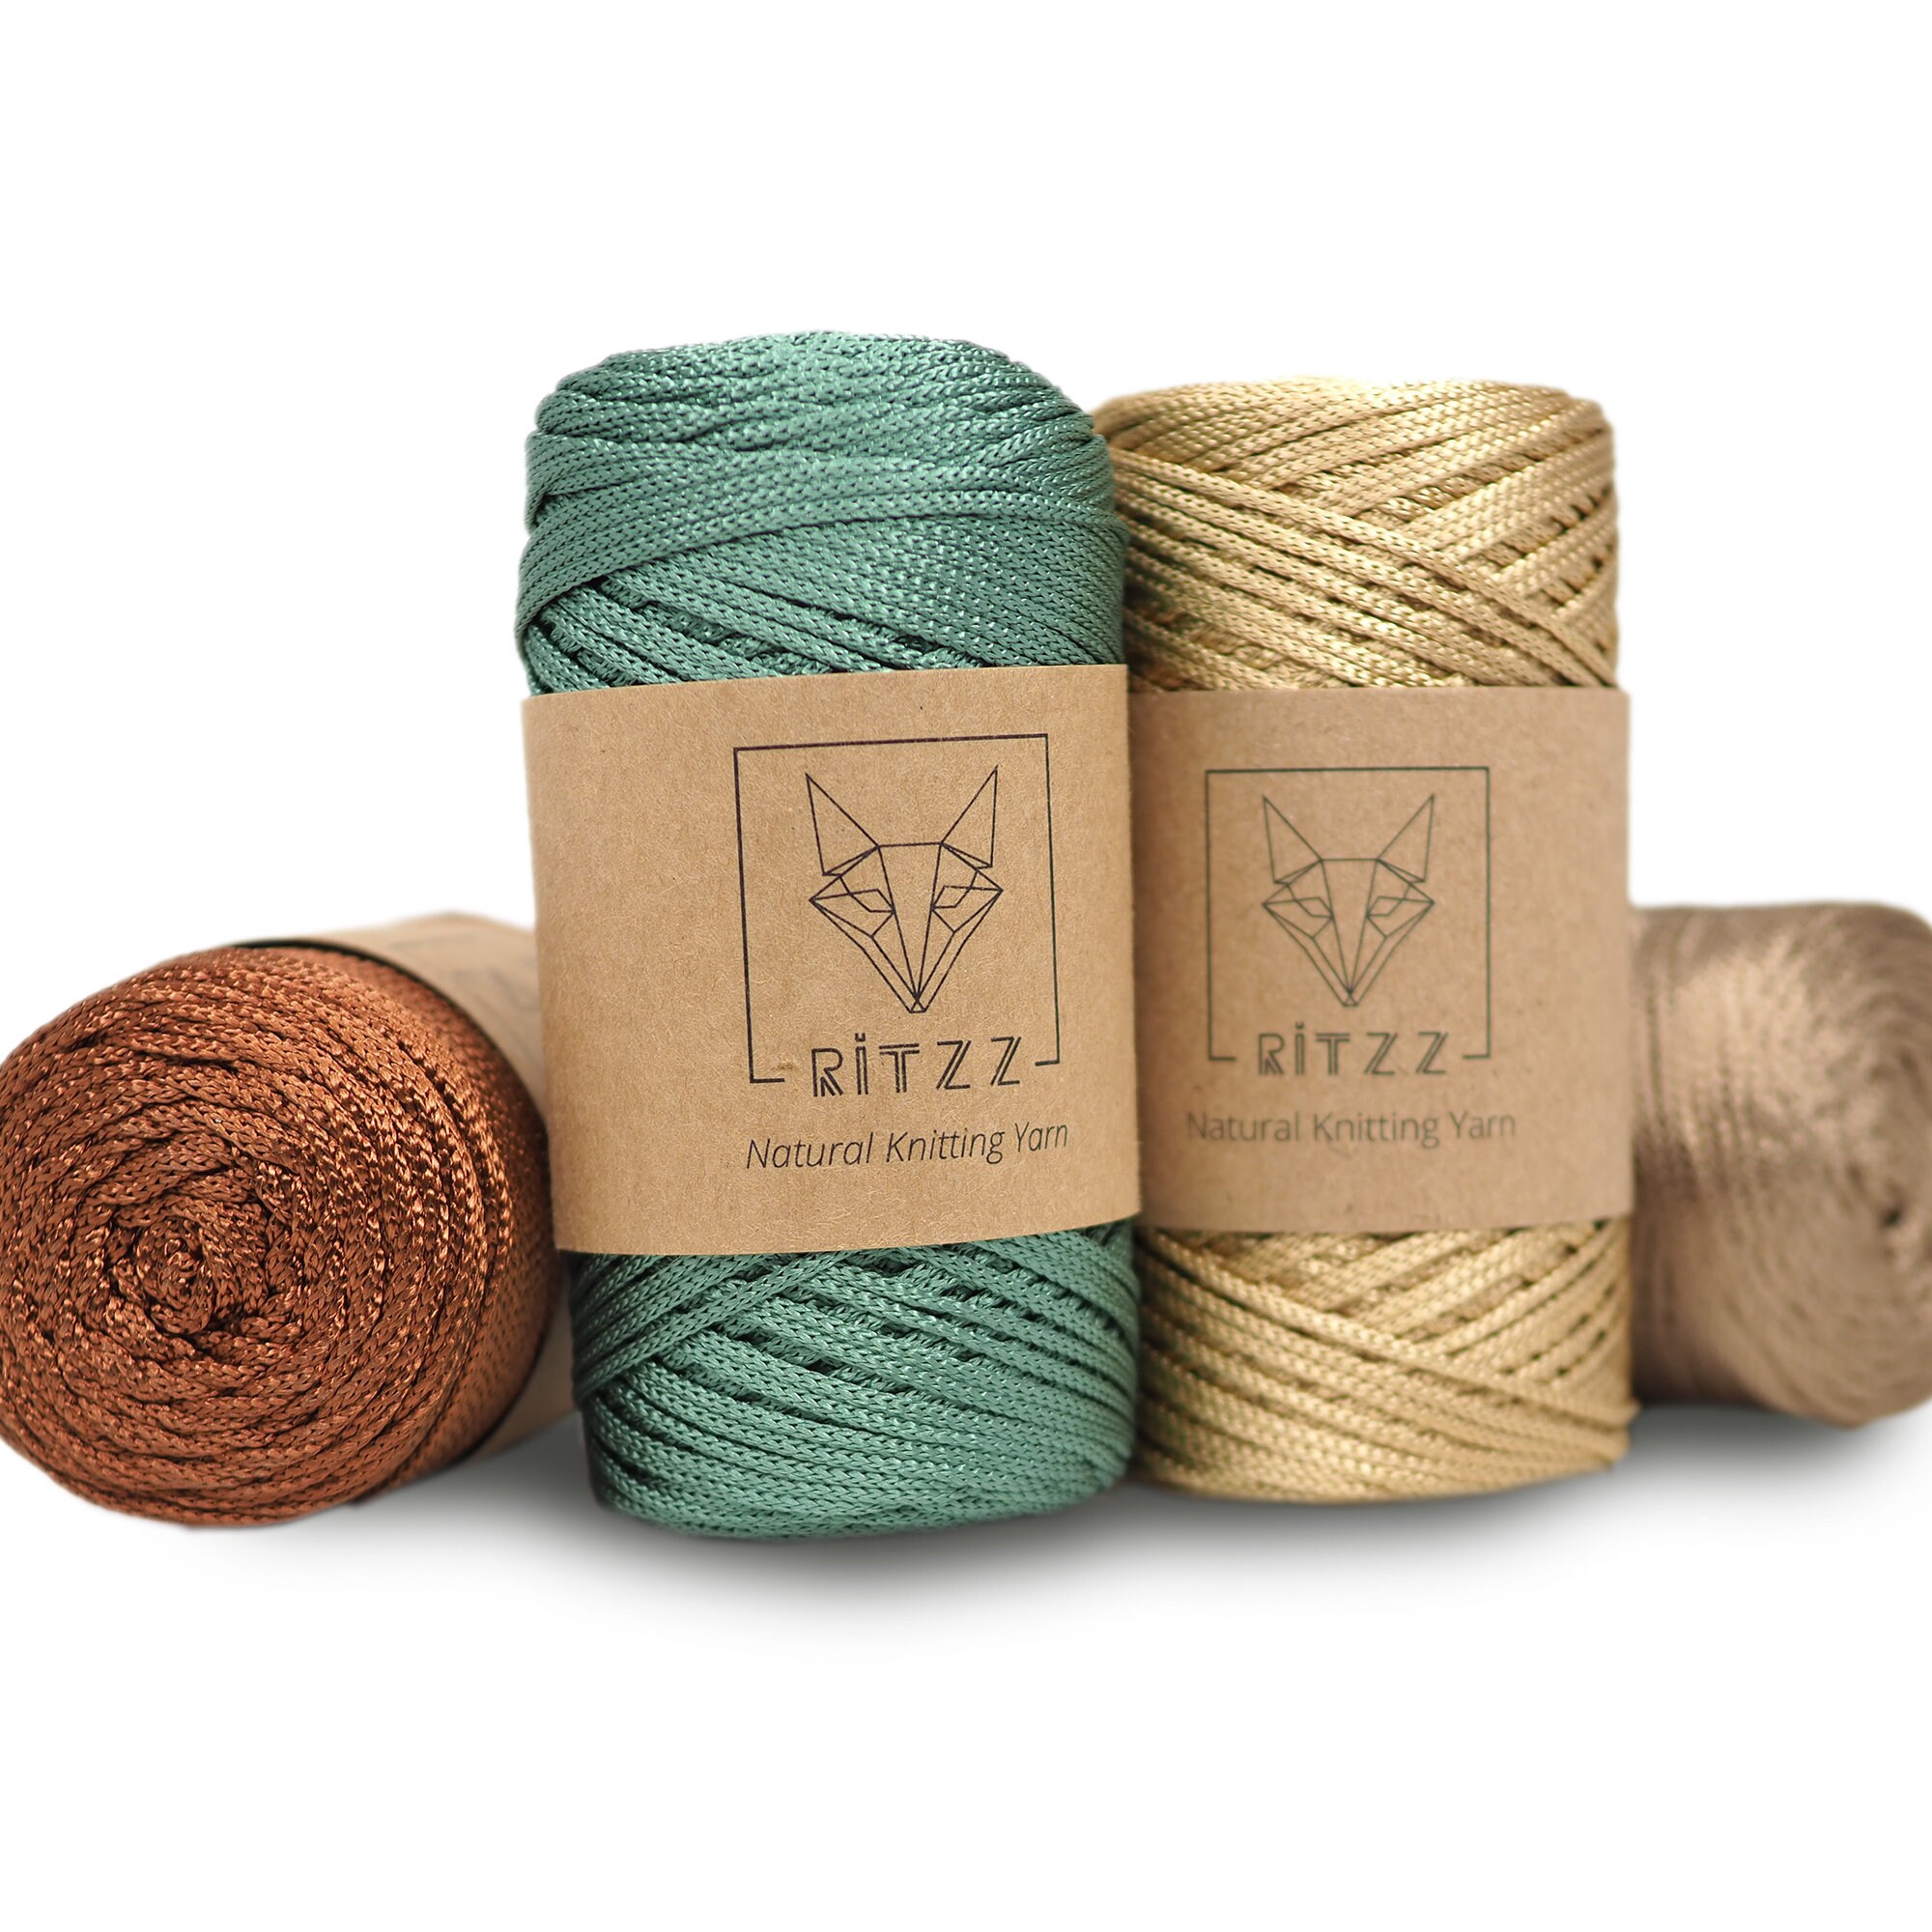 100% Cotton Crochet Yarn for Bag,2mm x 162 Yards,Macrame Cord,Chunky Yarn  for Crocheting Handbag, Purse,Blankets Crafts Projects (Yellow) Yellow